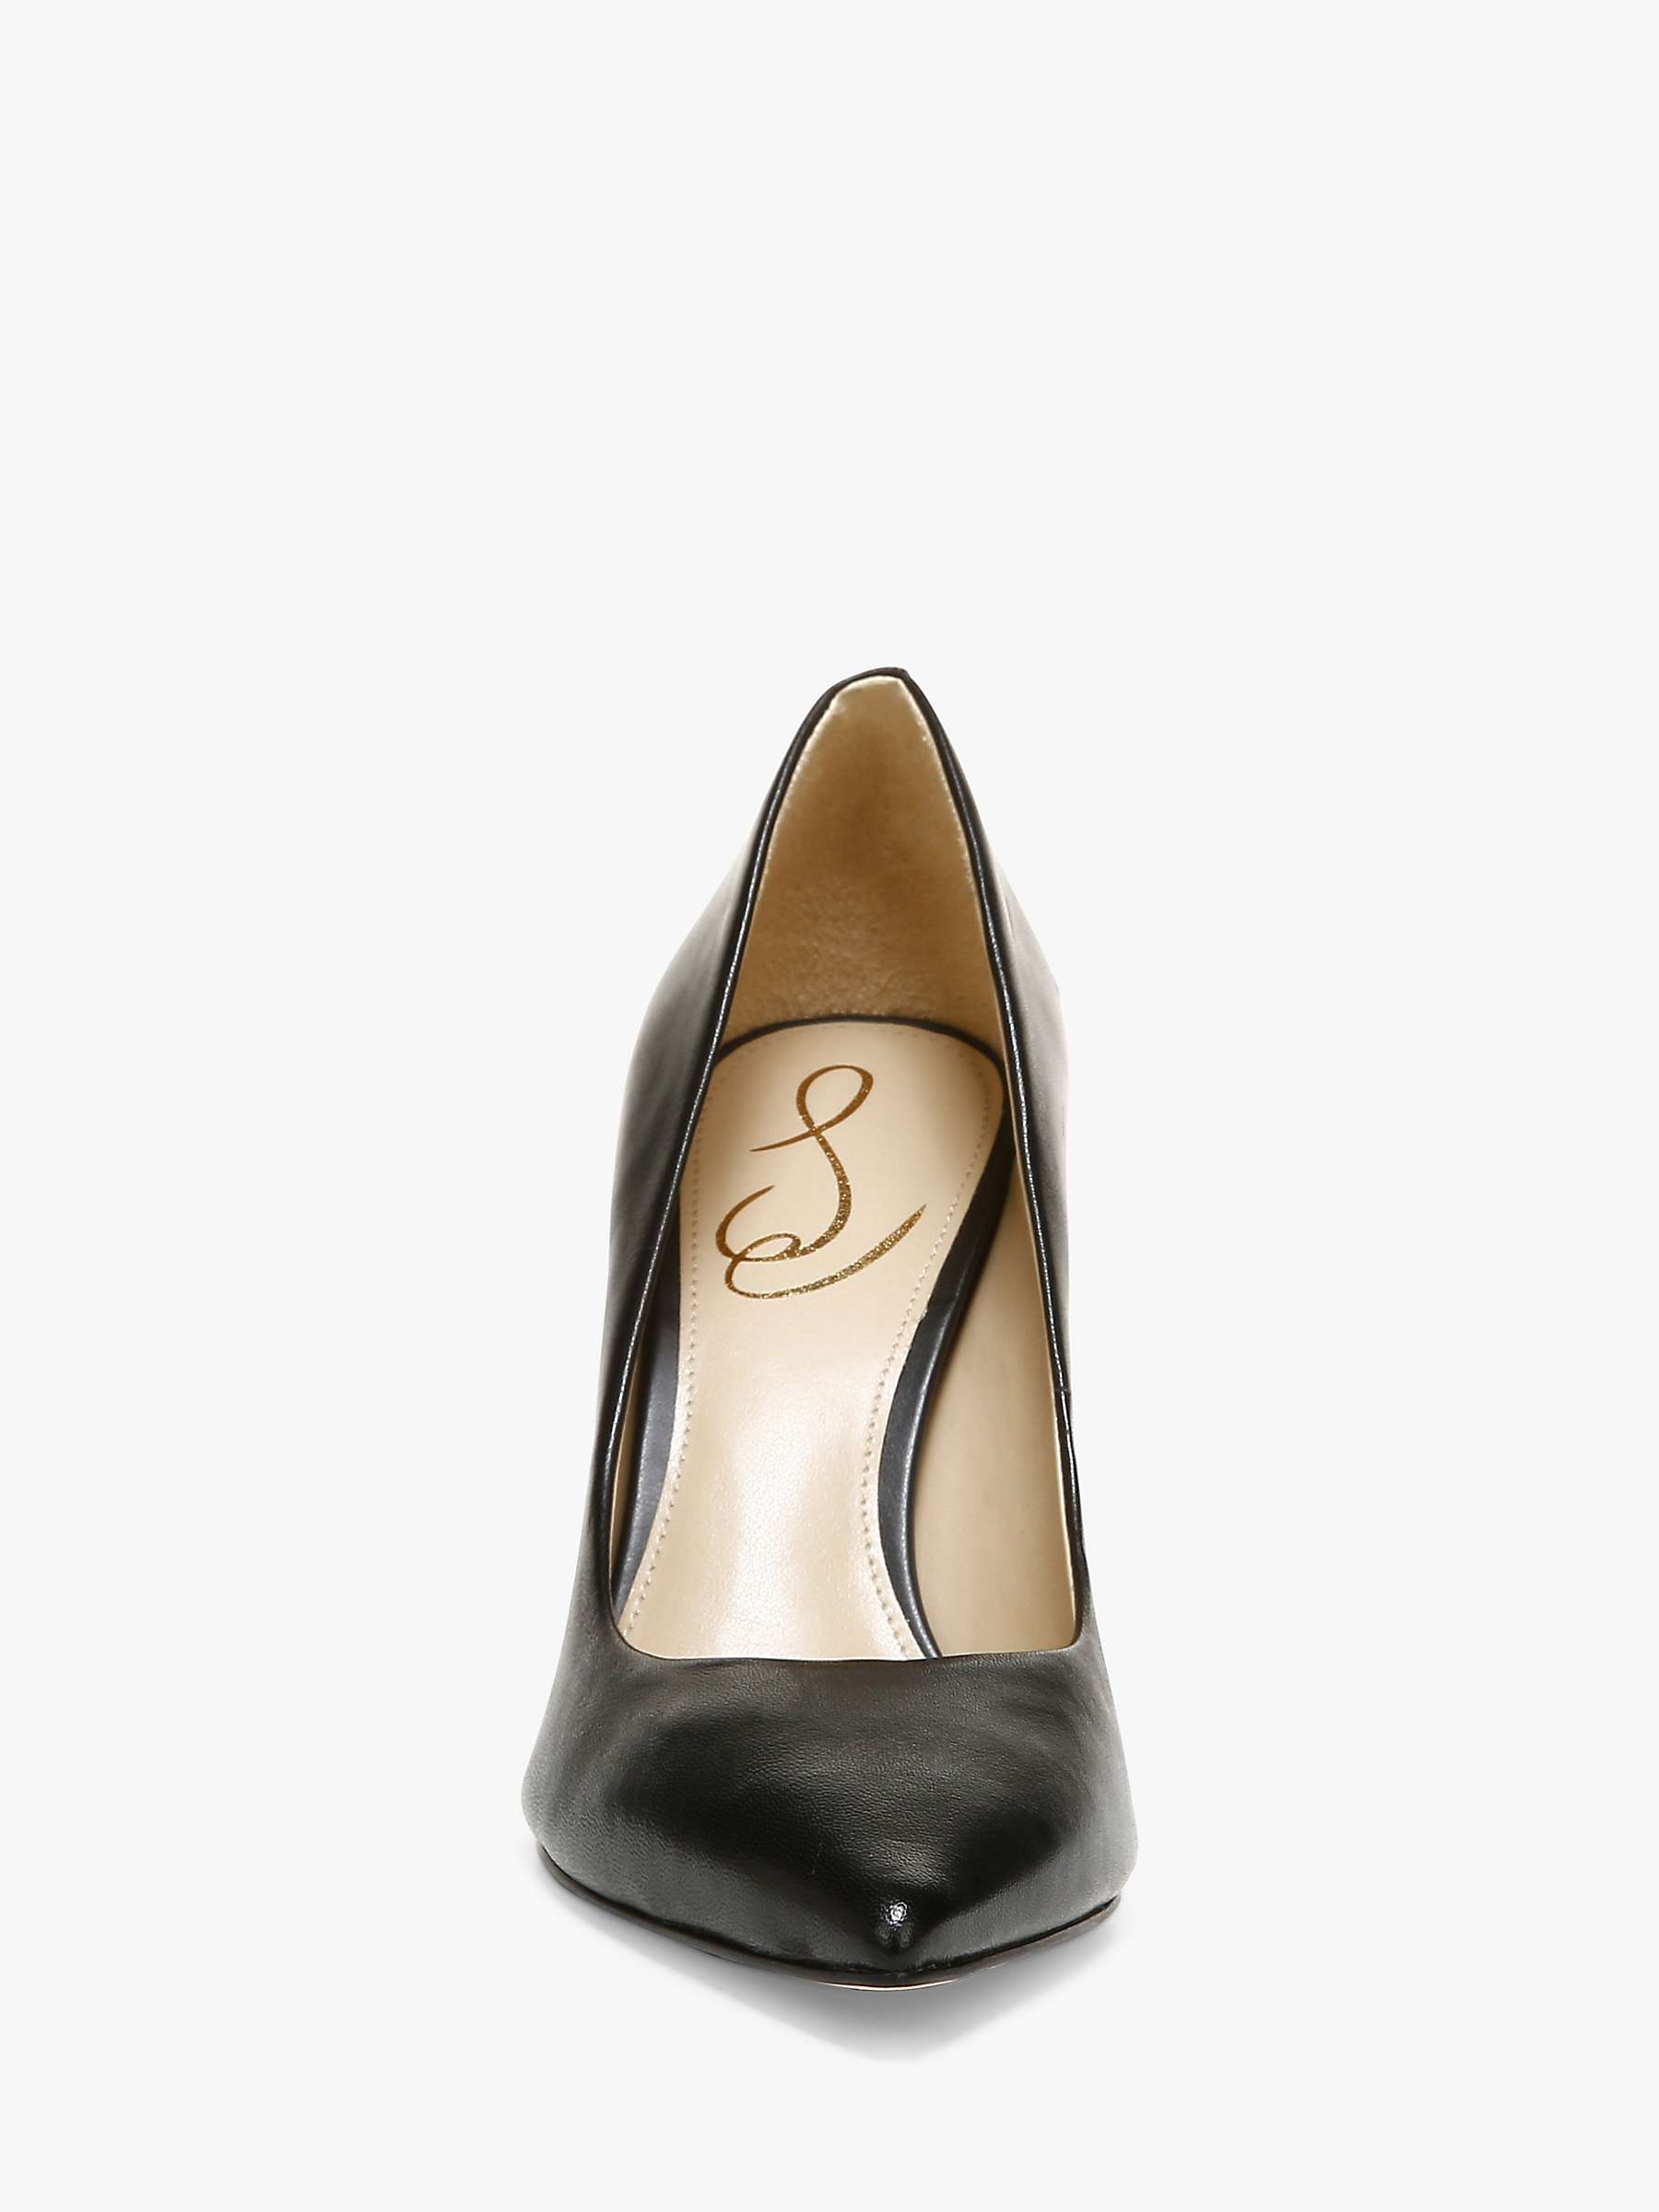 Buy Sam Edelman Hazel Leather Pointed Toe Heeled Pumps Online at johnlewis.com